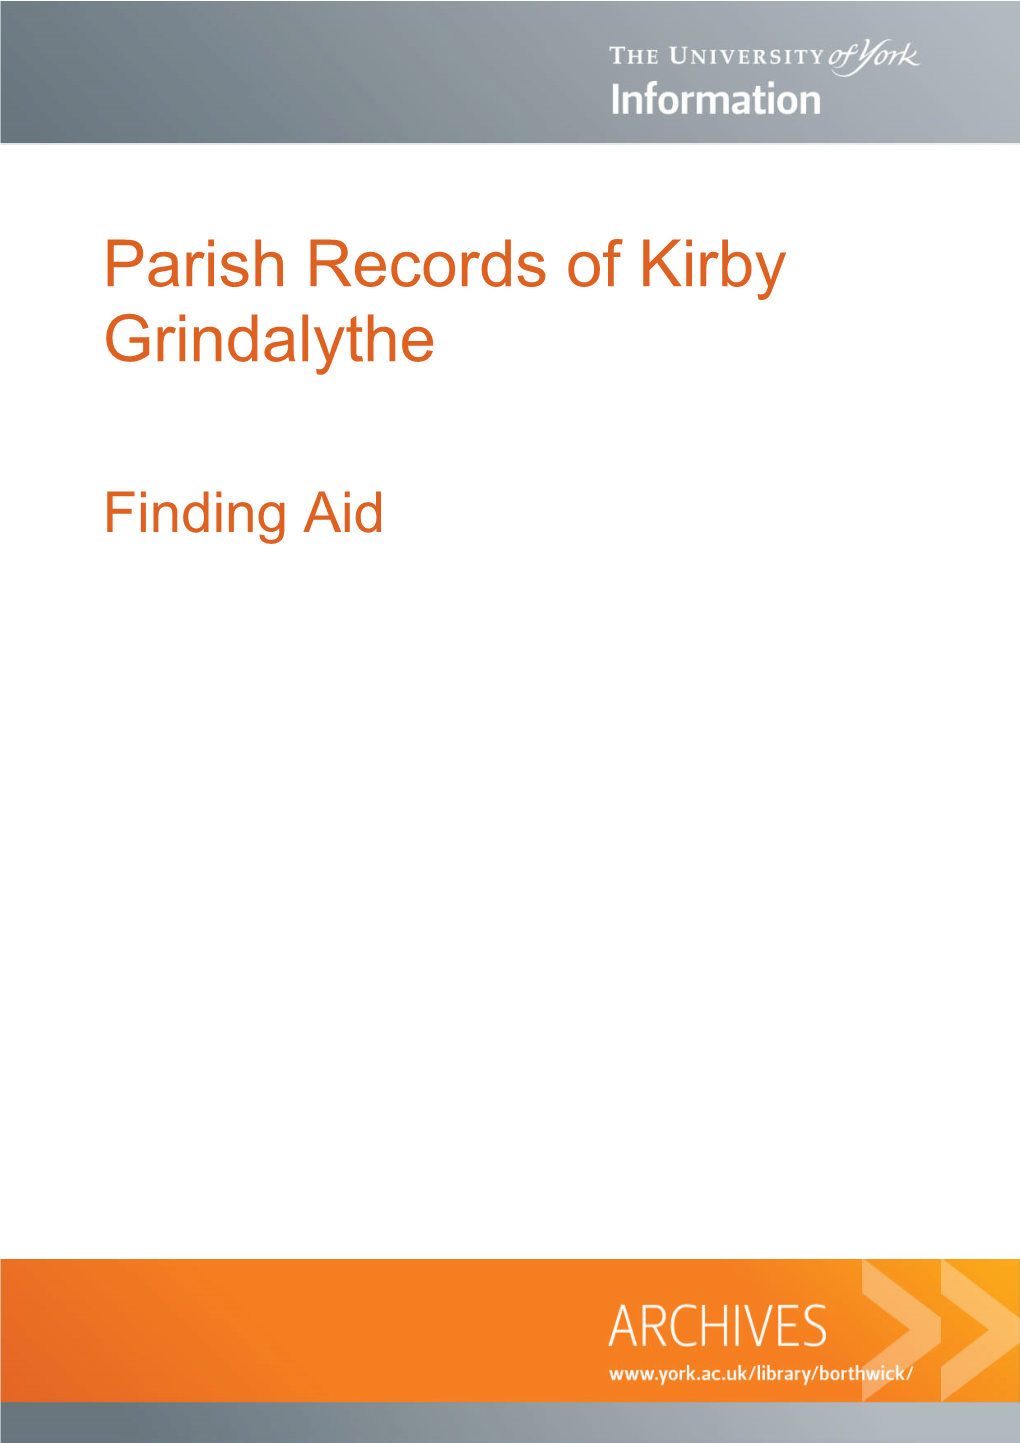 Parish Records of Kirby Grindalythe